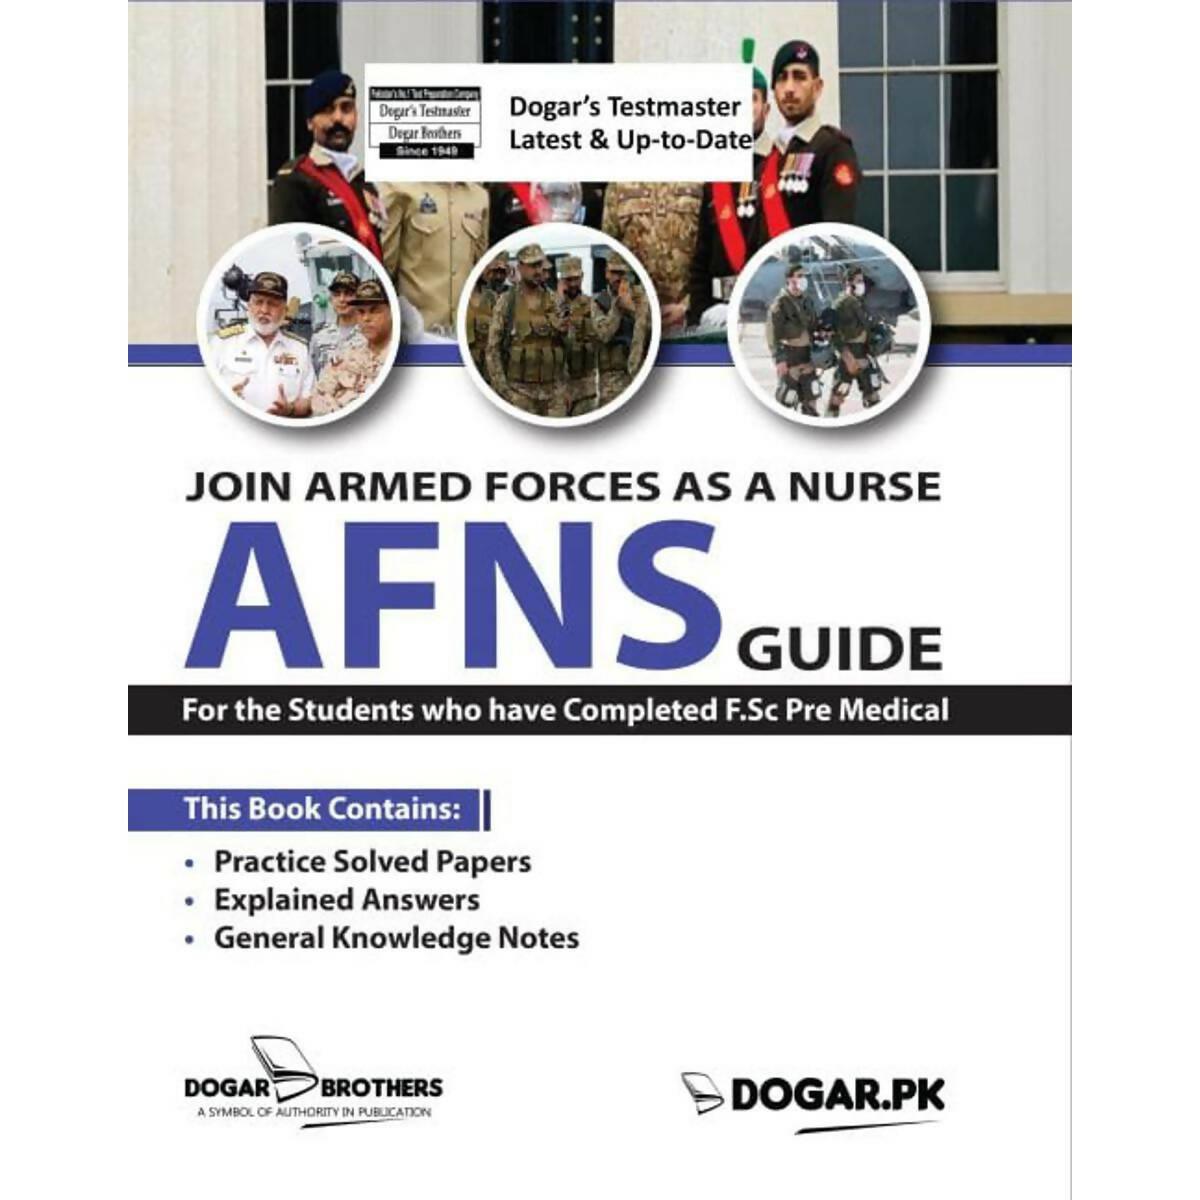 AFNS Guide for FSc Pre Medical Students - ValueBox